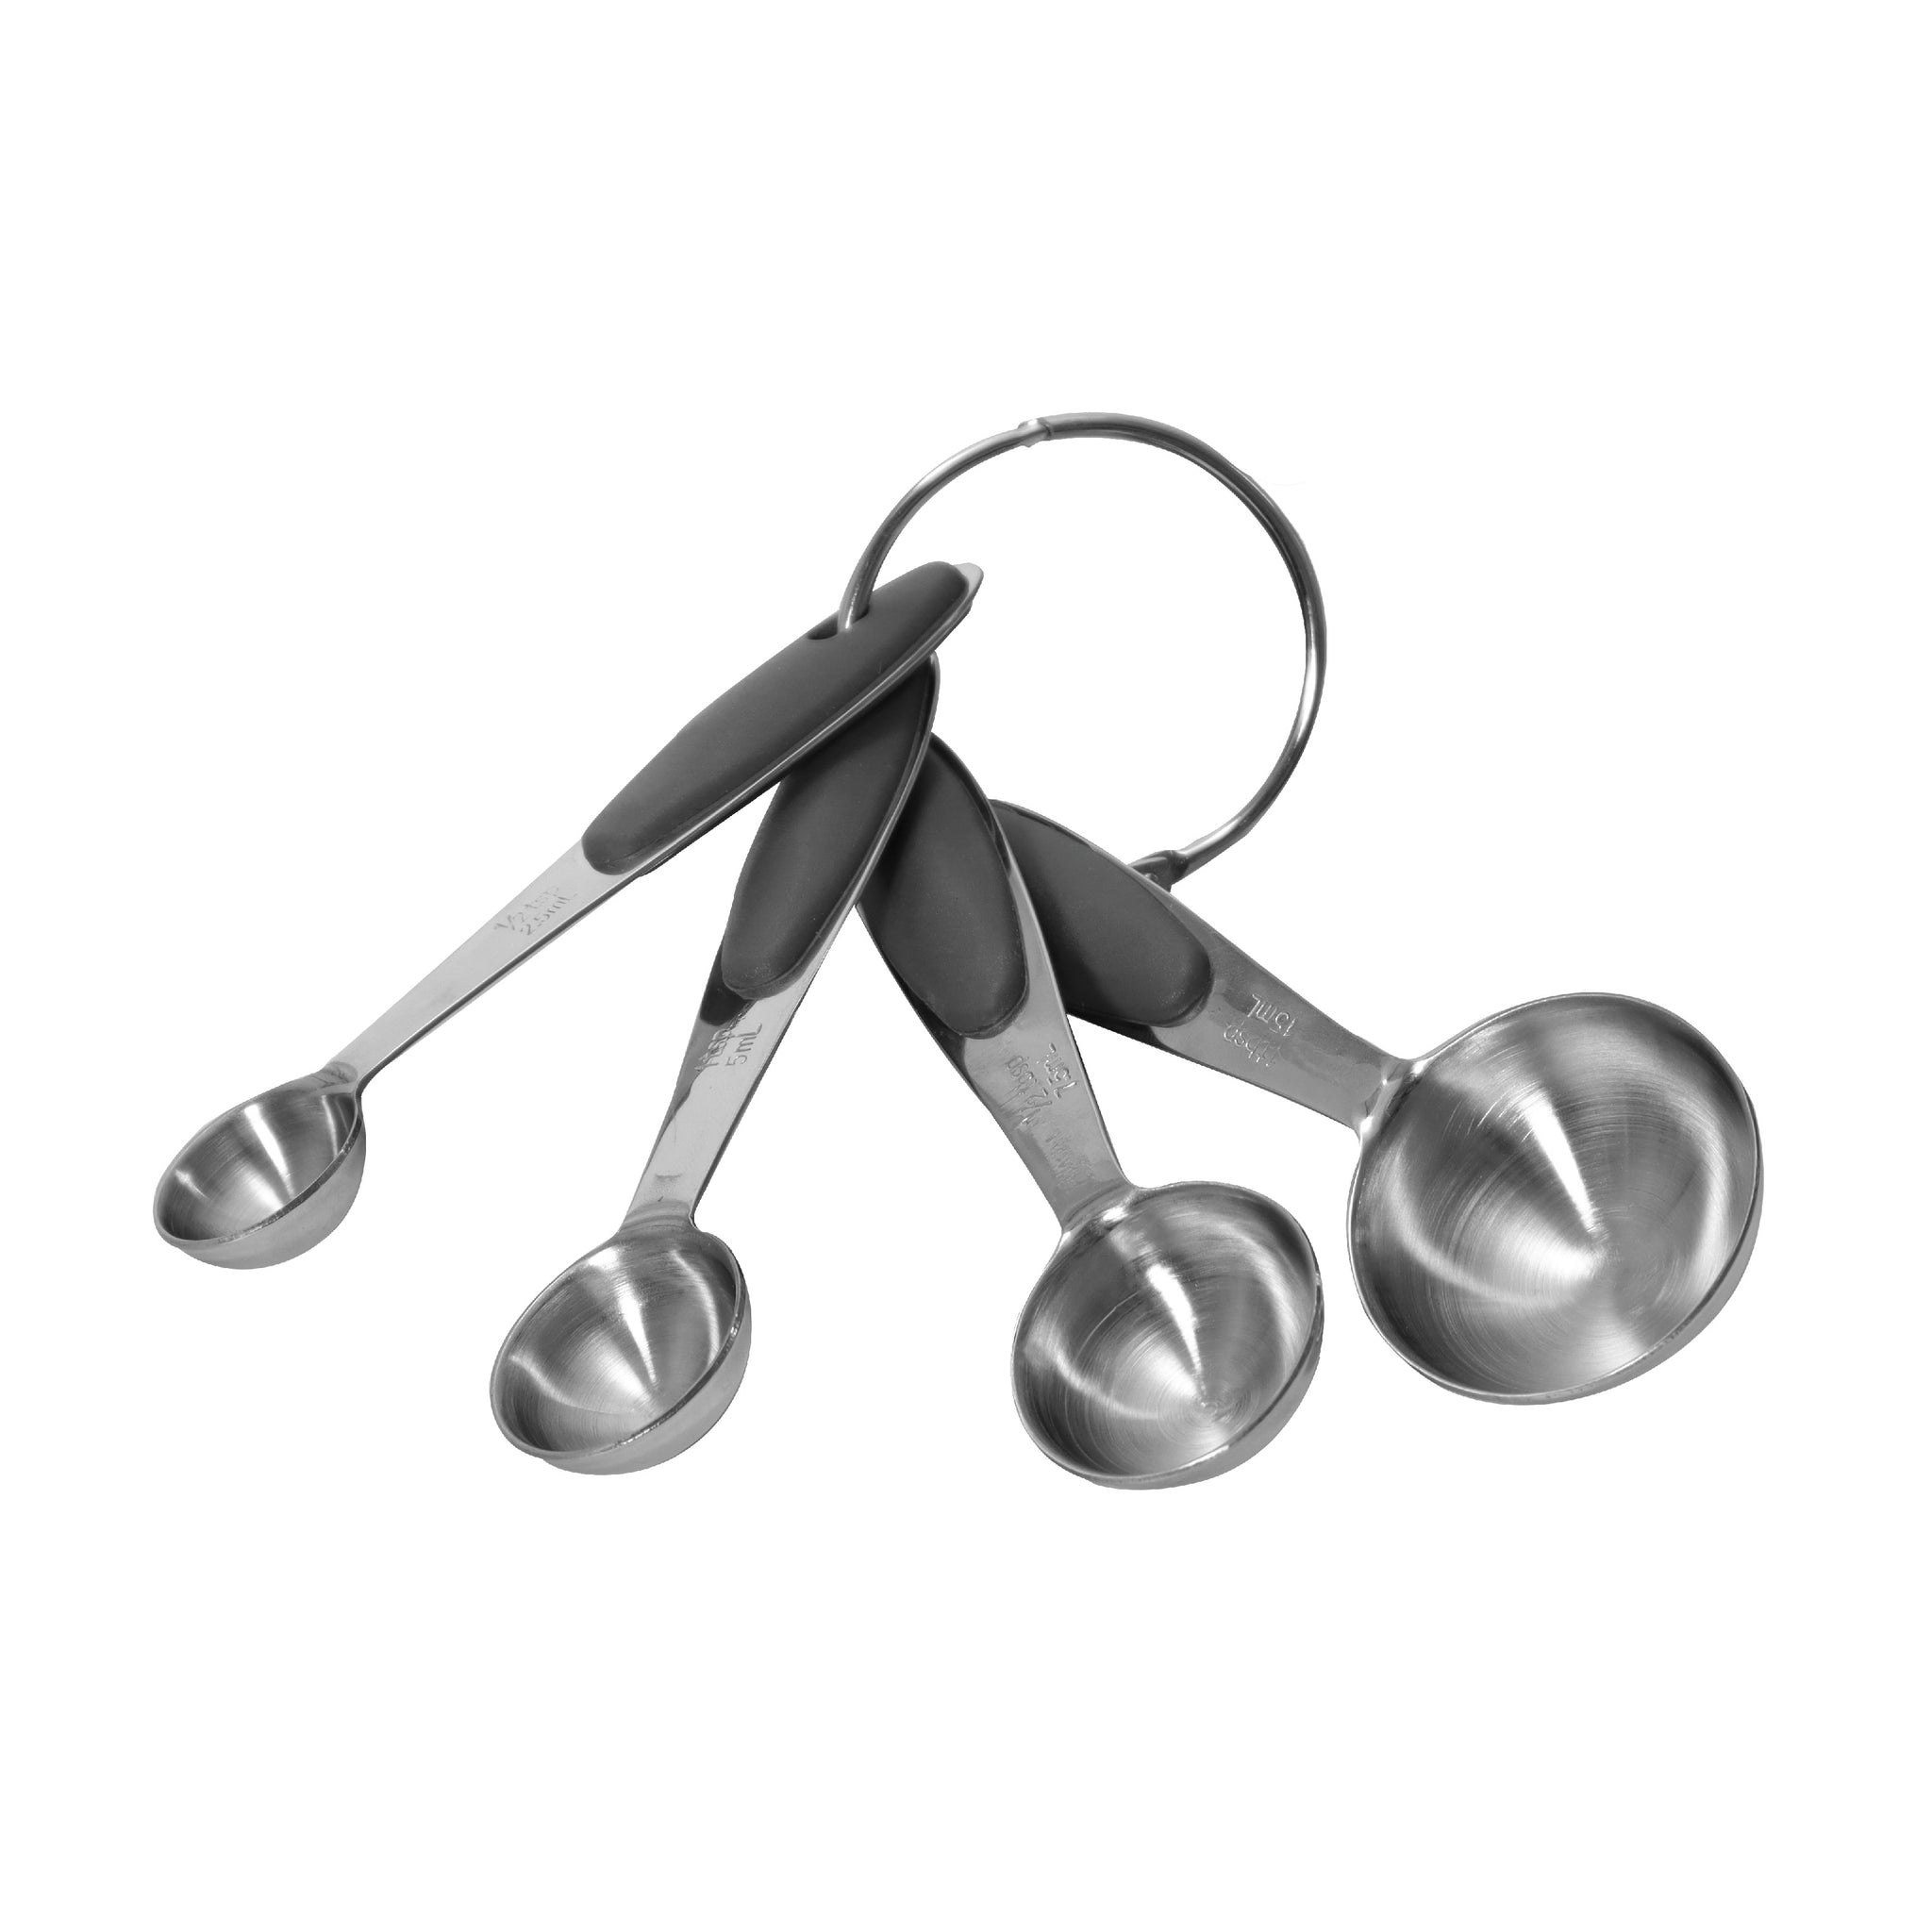 Stainless Steel Measuring Spoon Set Grey Cookware Accessories - Baker's Secret